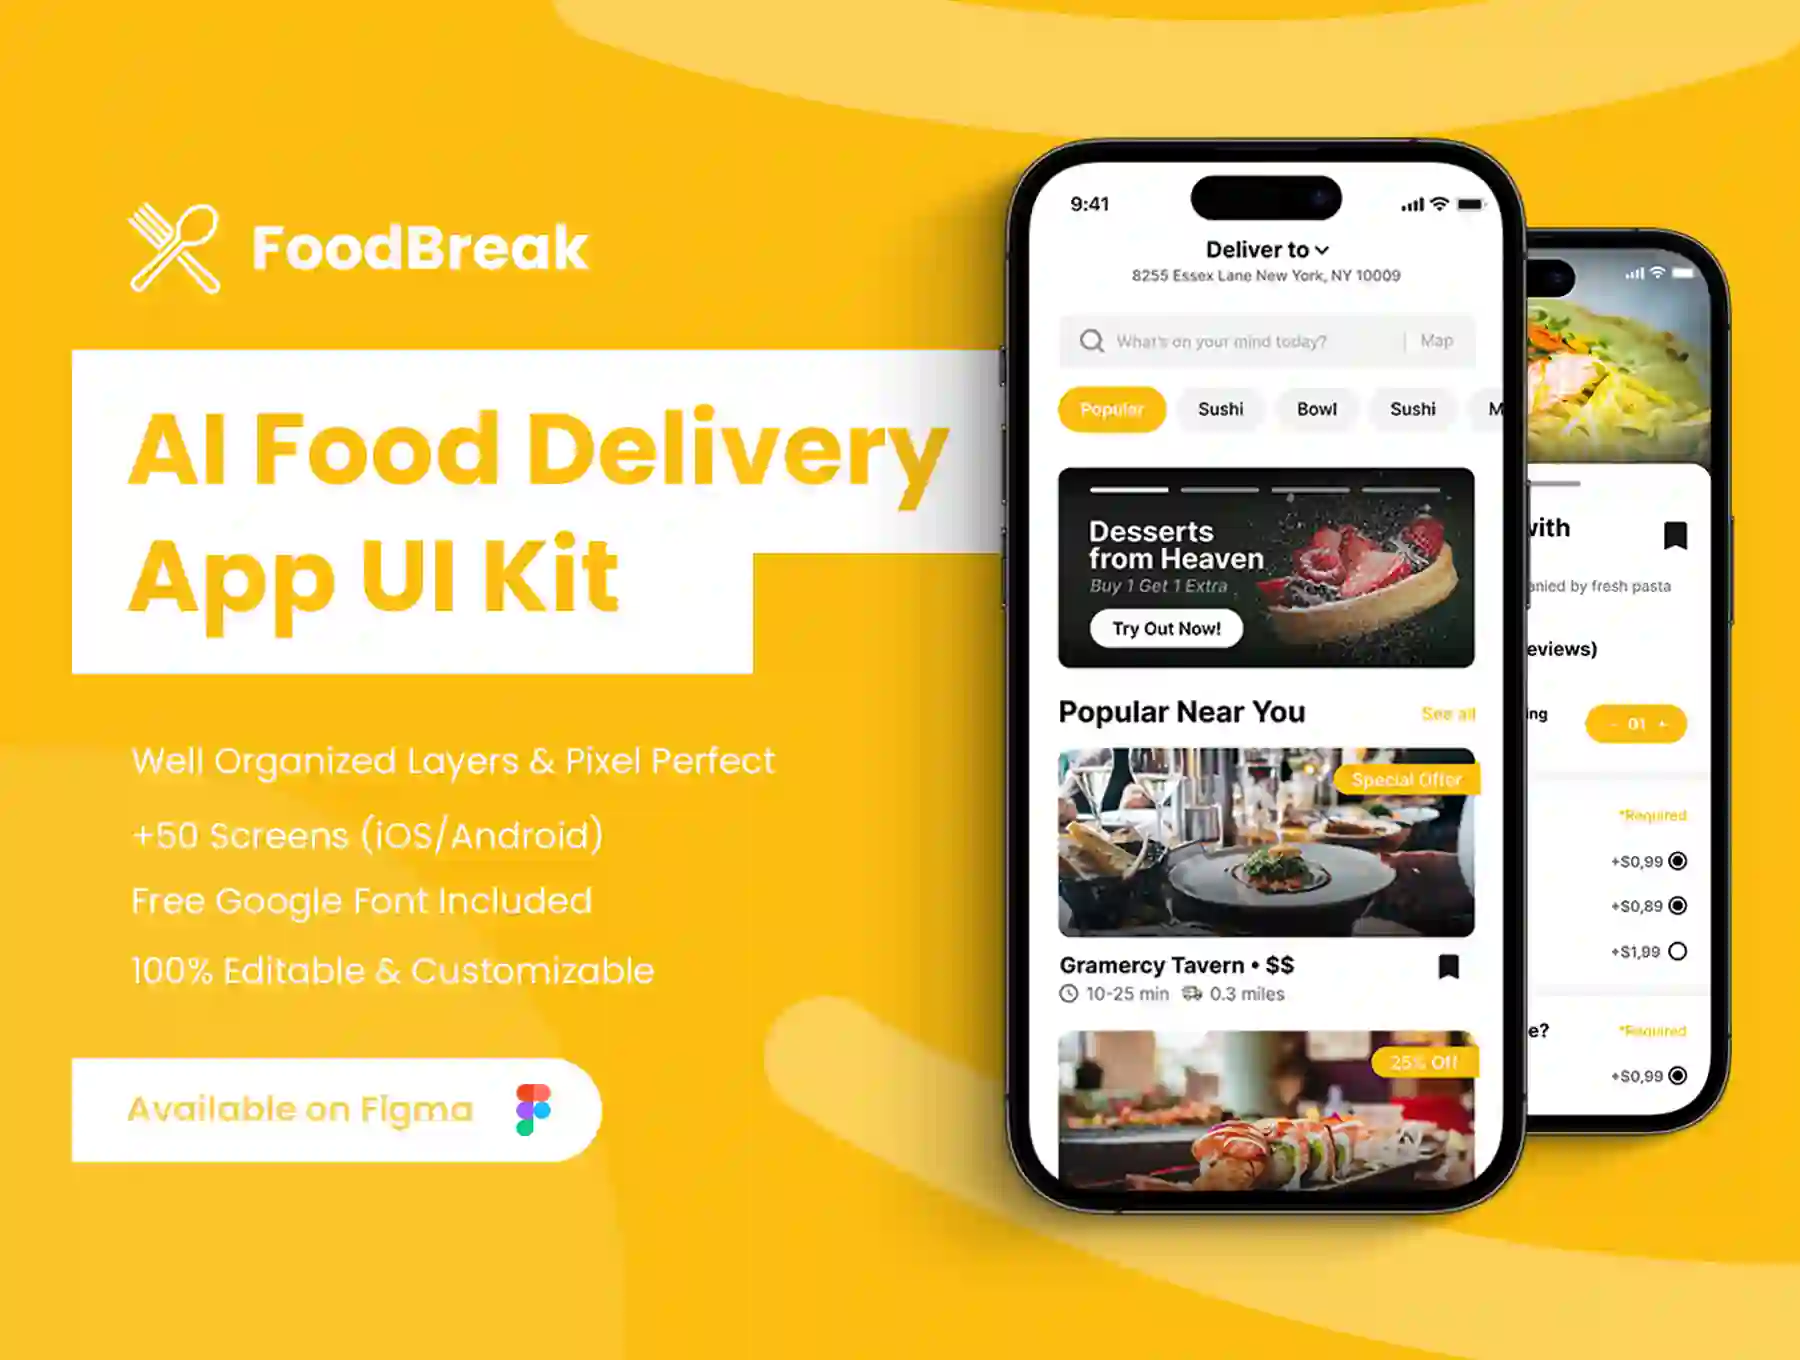 FoodBreak - AI Intelligent Food Delivery App Kit